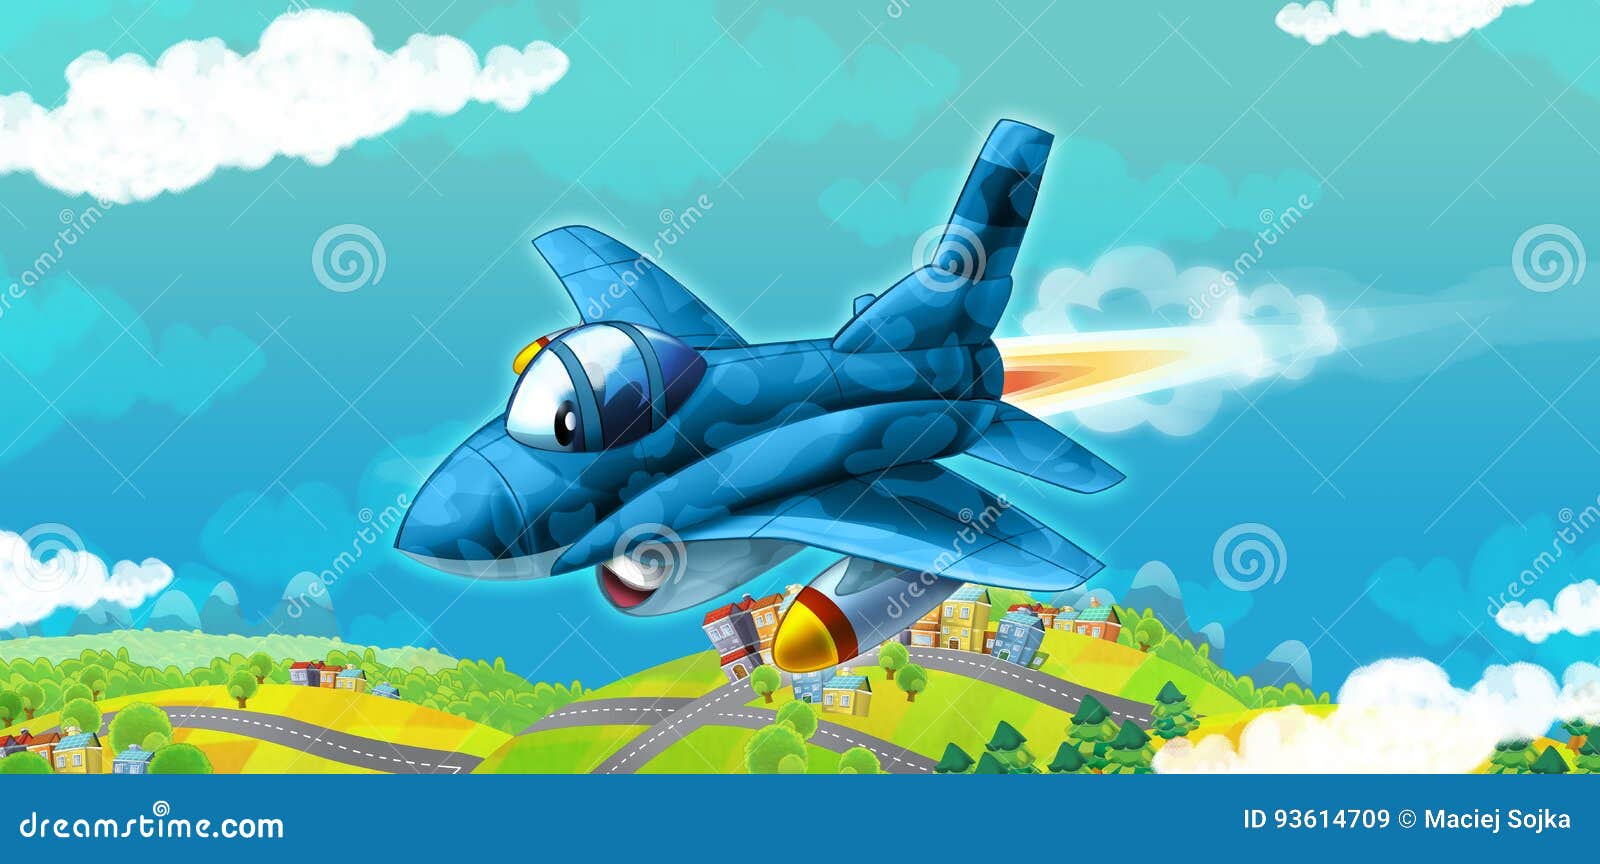 Cartoon Jet Fighter Flying Over Some City Stock Illustration - Illustration  of fairy, high: 93614709